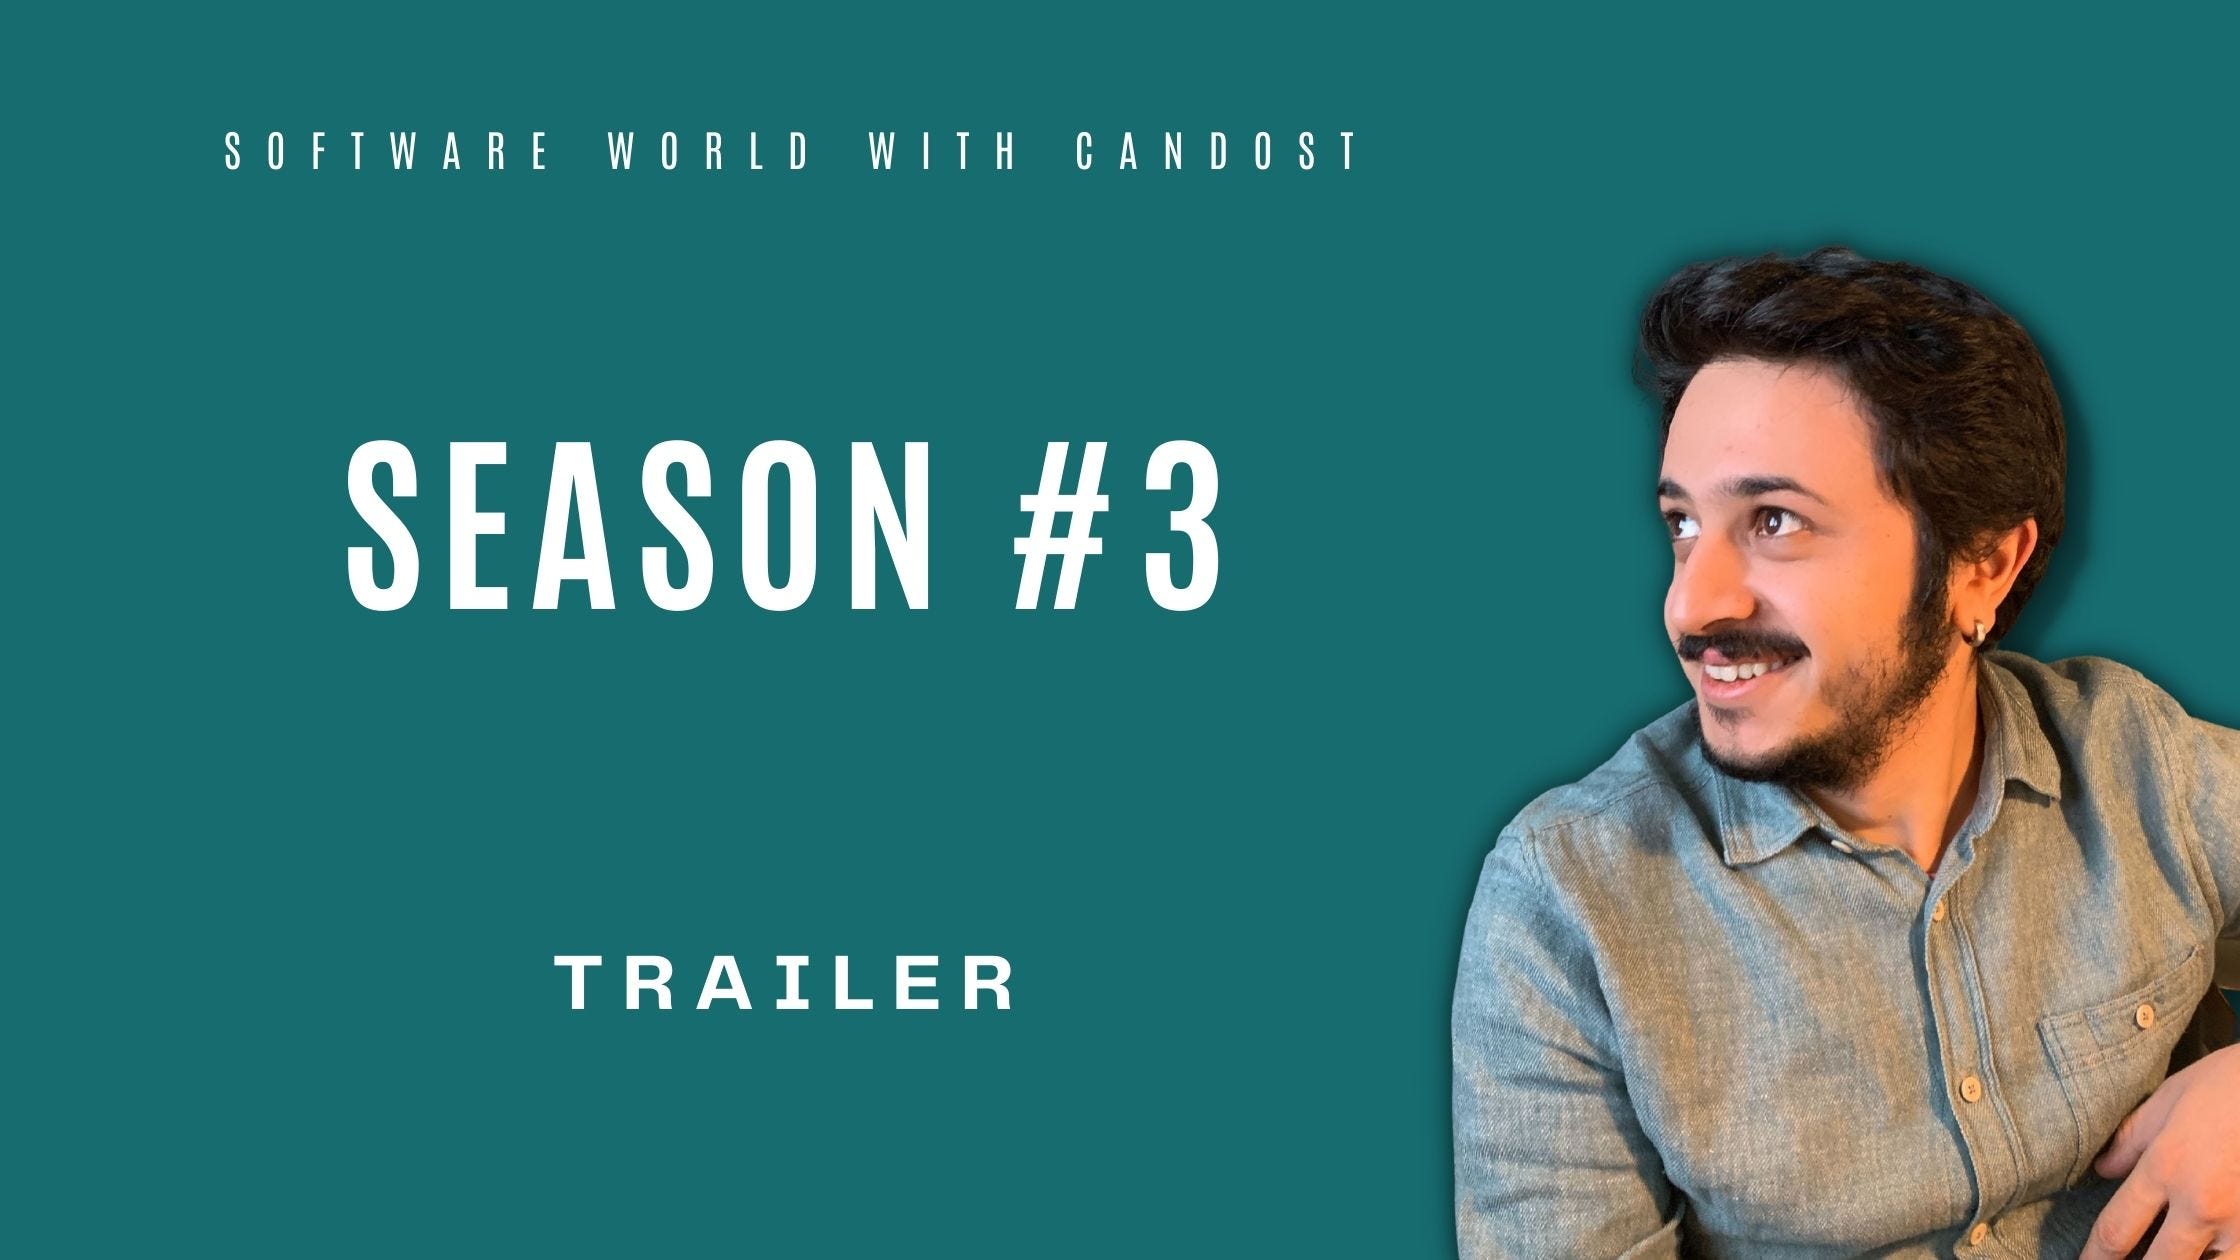 Trailer: Season #3